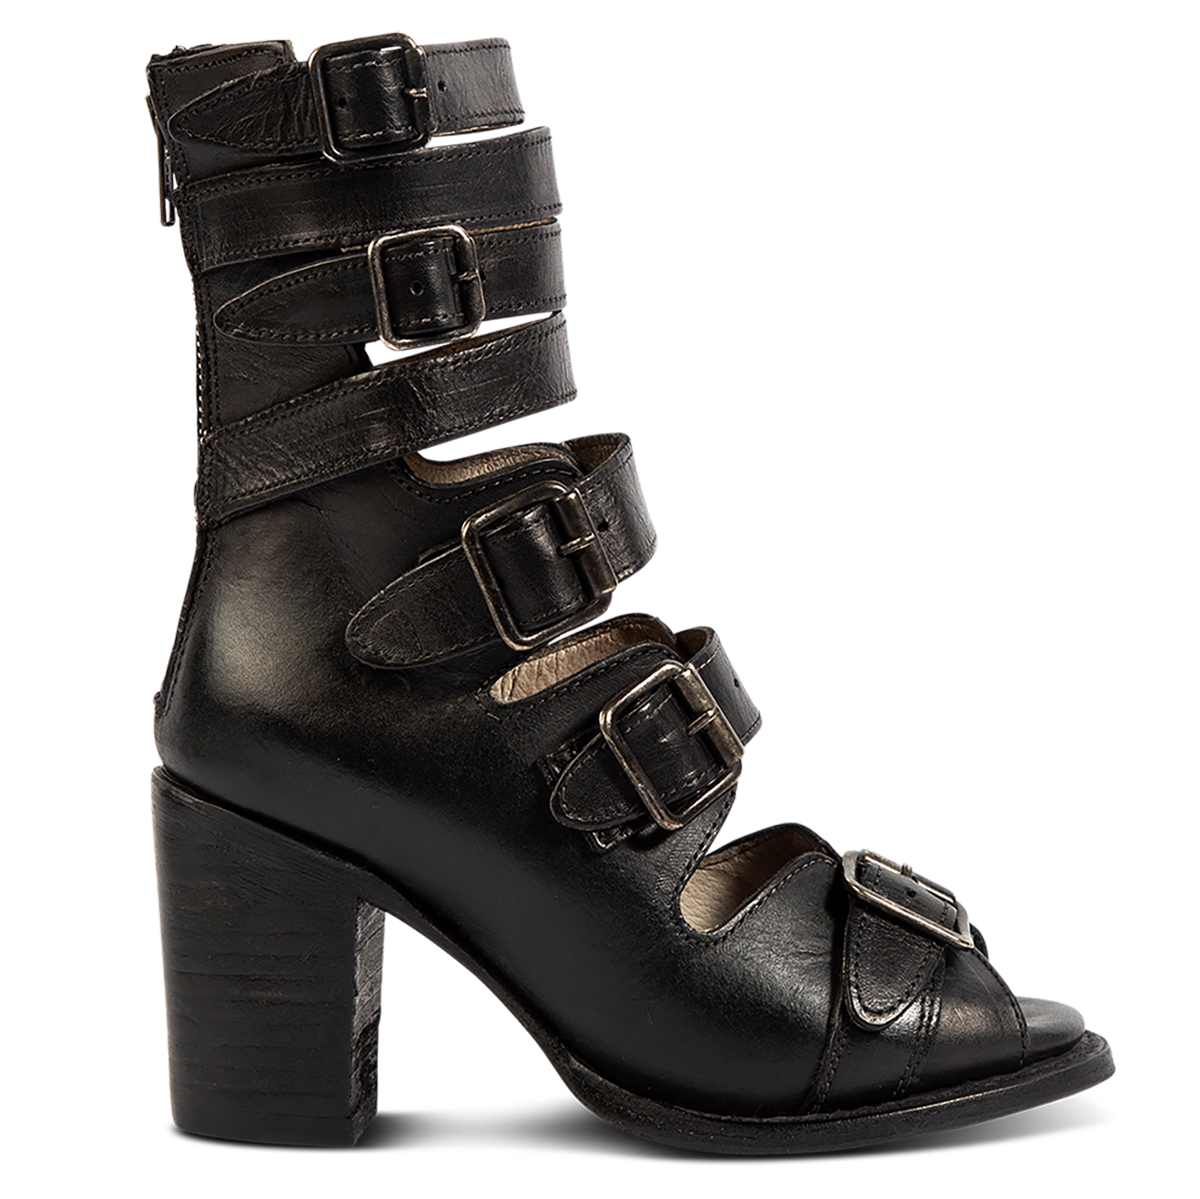 FREEBIRD women's Bond black/black sandal with fashion straps and stacked heel